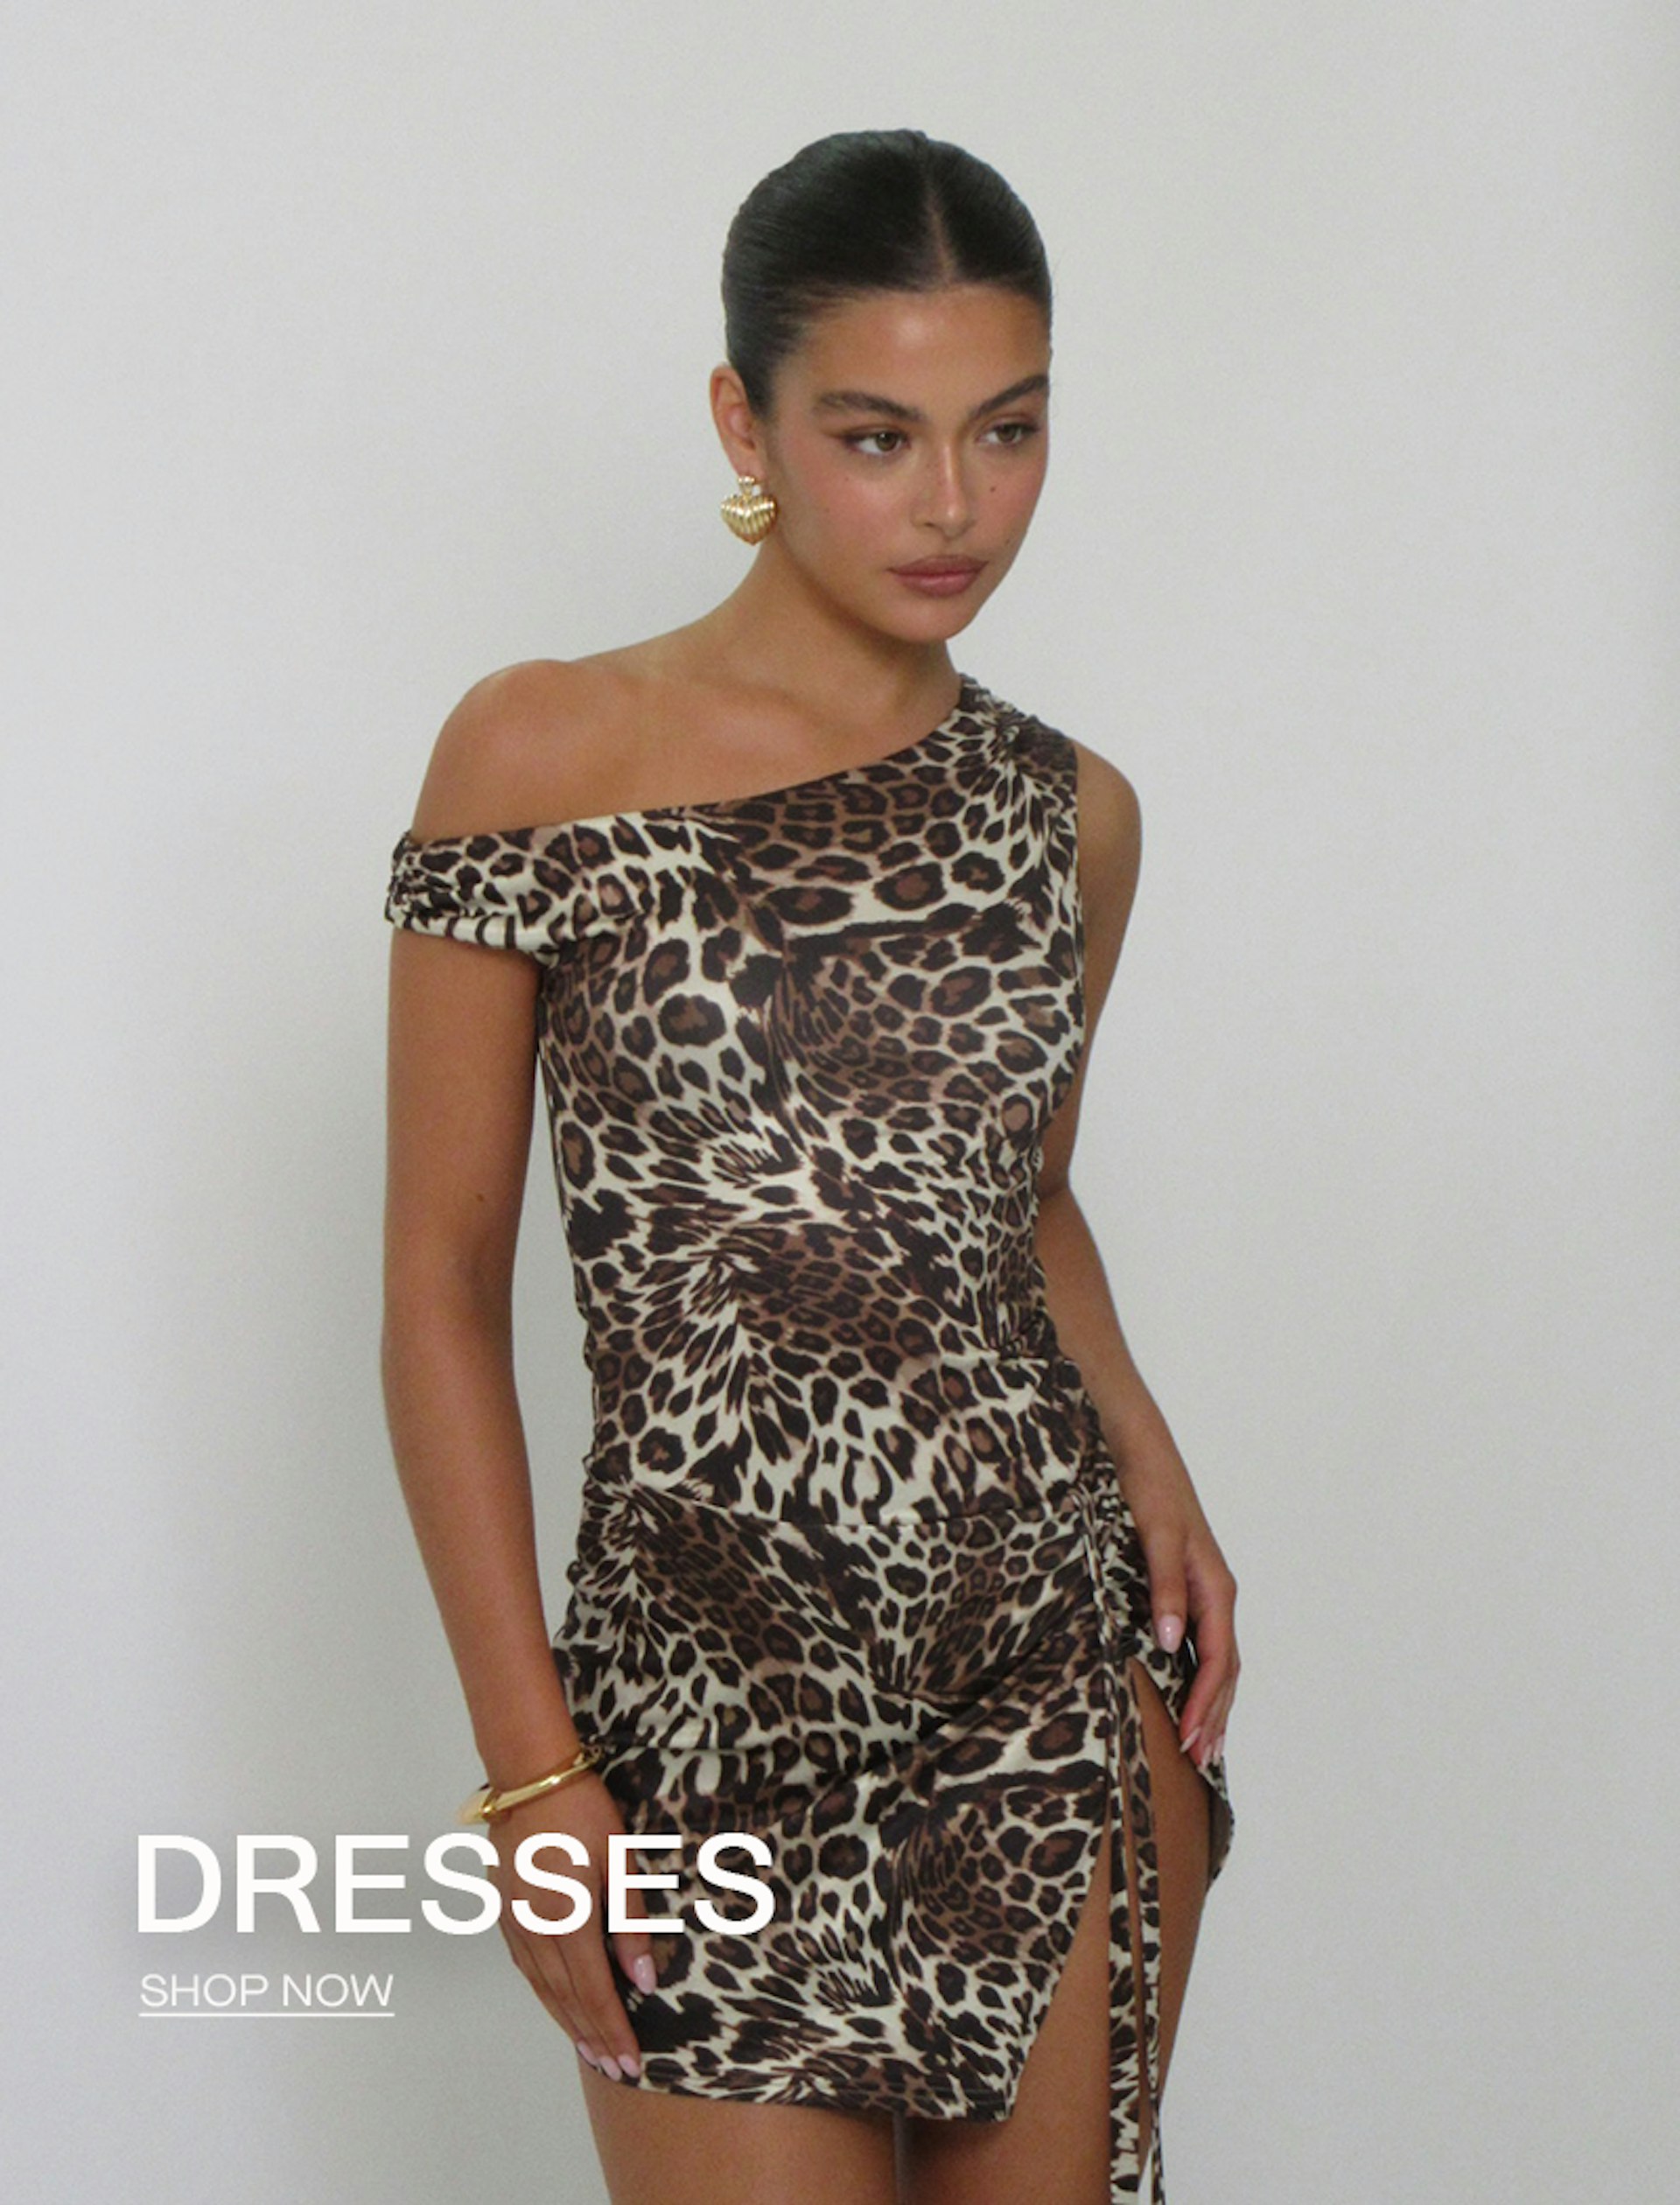 Model wearing a leopard print mini dress